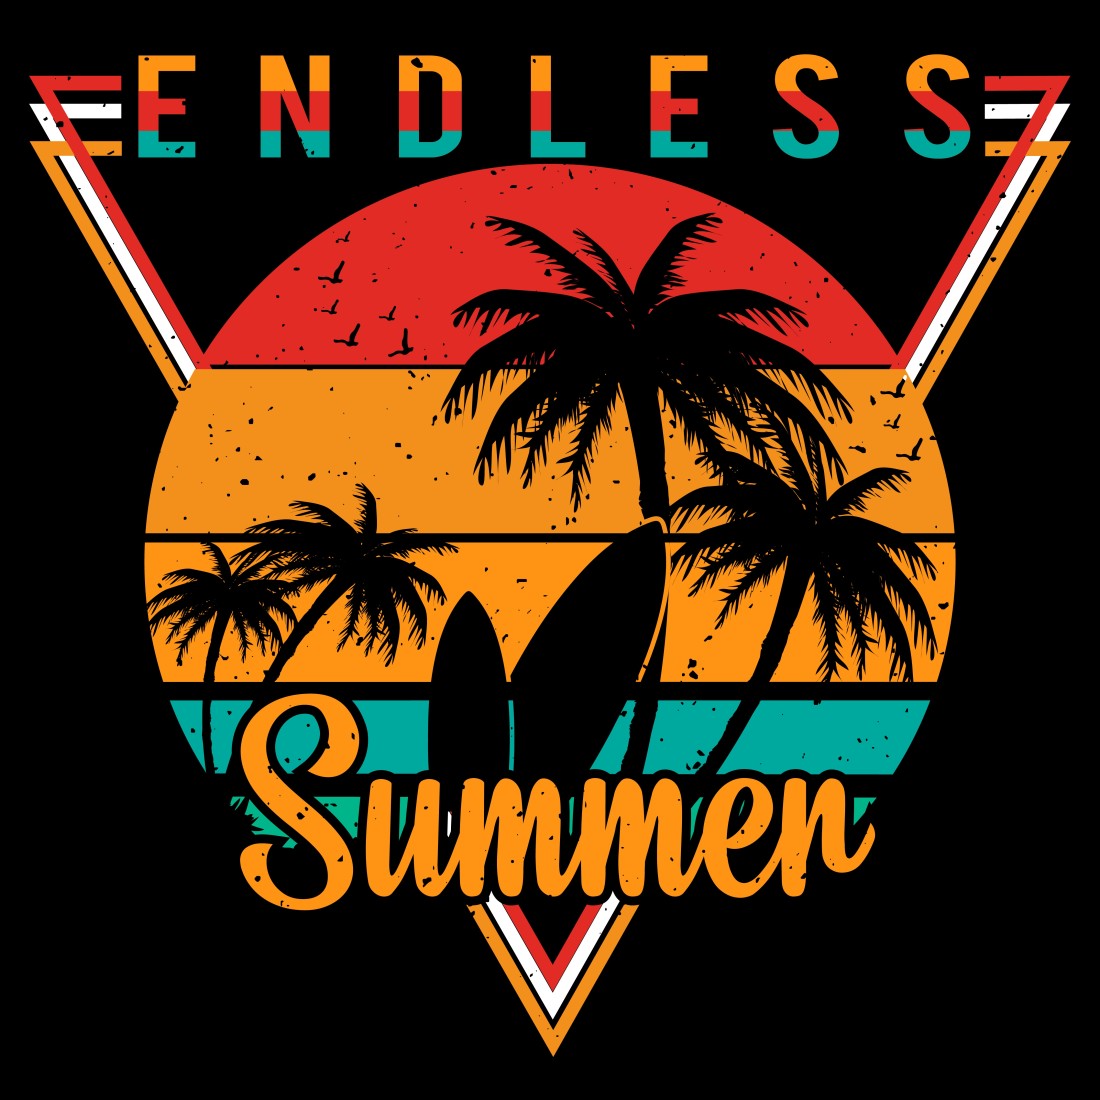 Endless Summer T-shirt Design cover image.